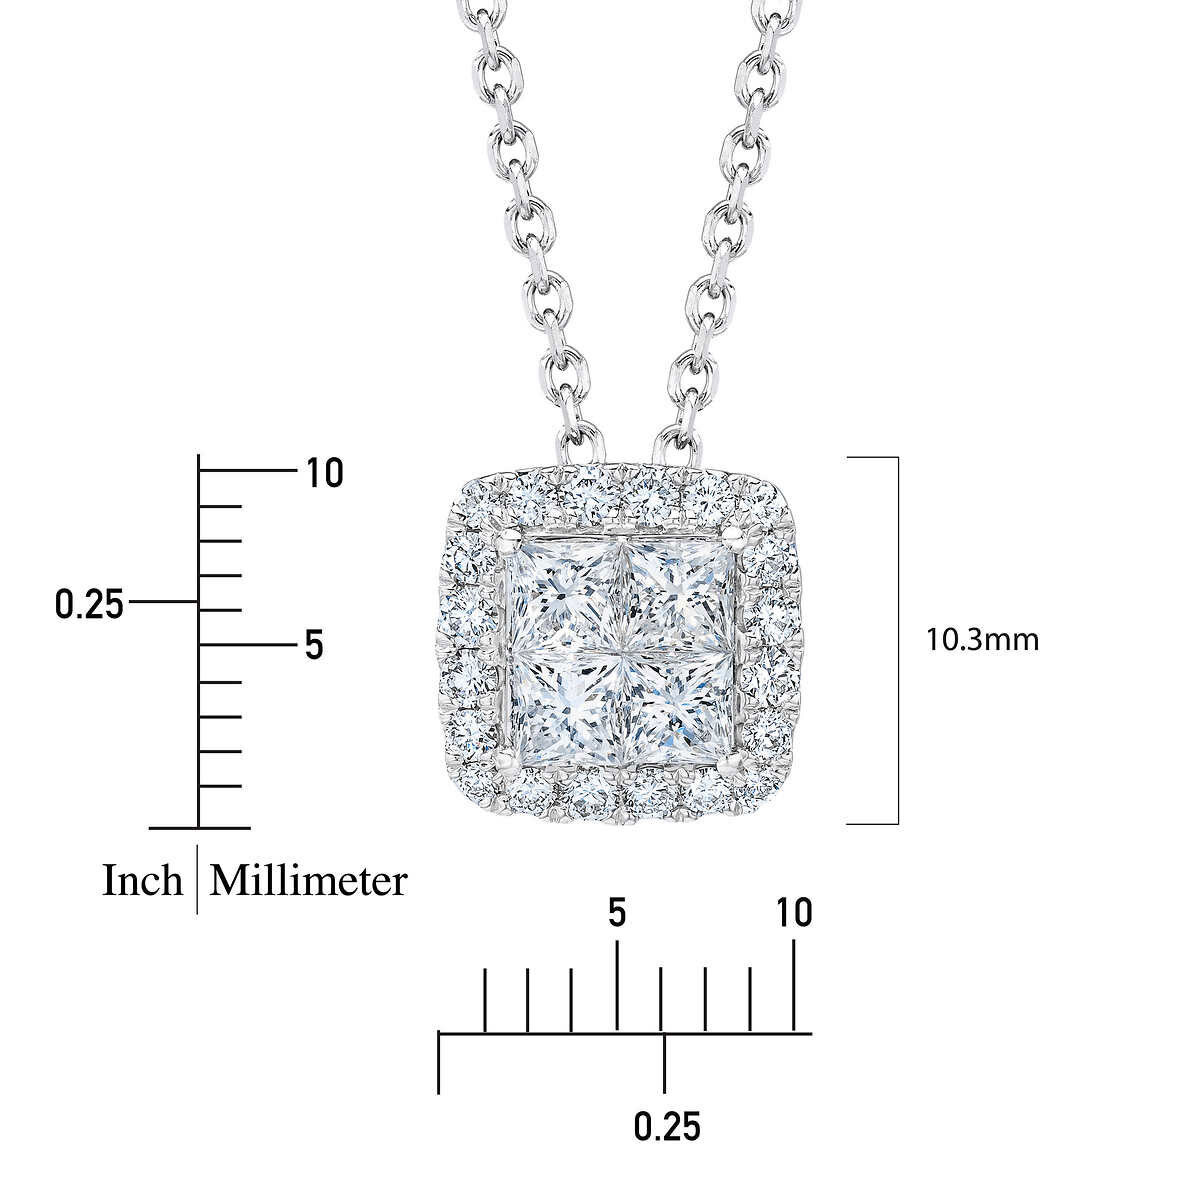 1.00ctw Princess & Round Brilliant Cut Diamond Halo Pendant, 14ct White Gold